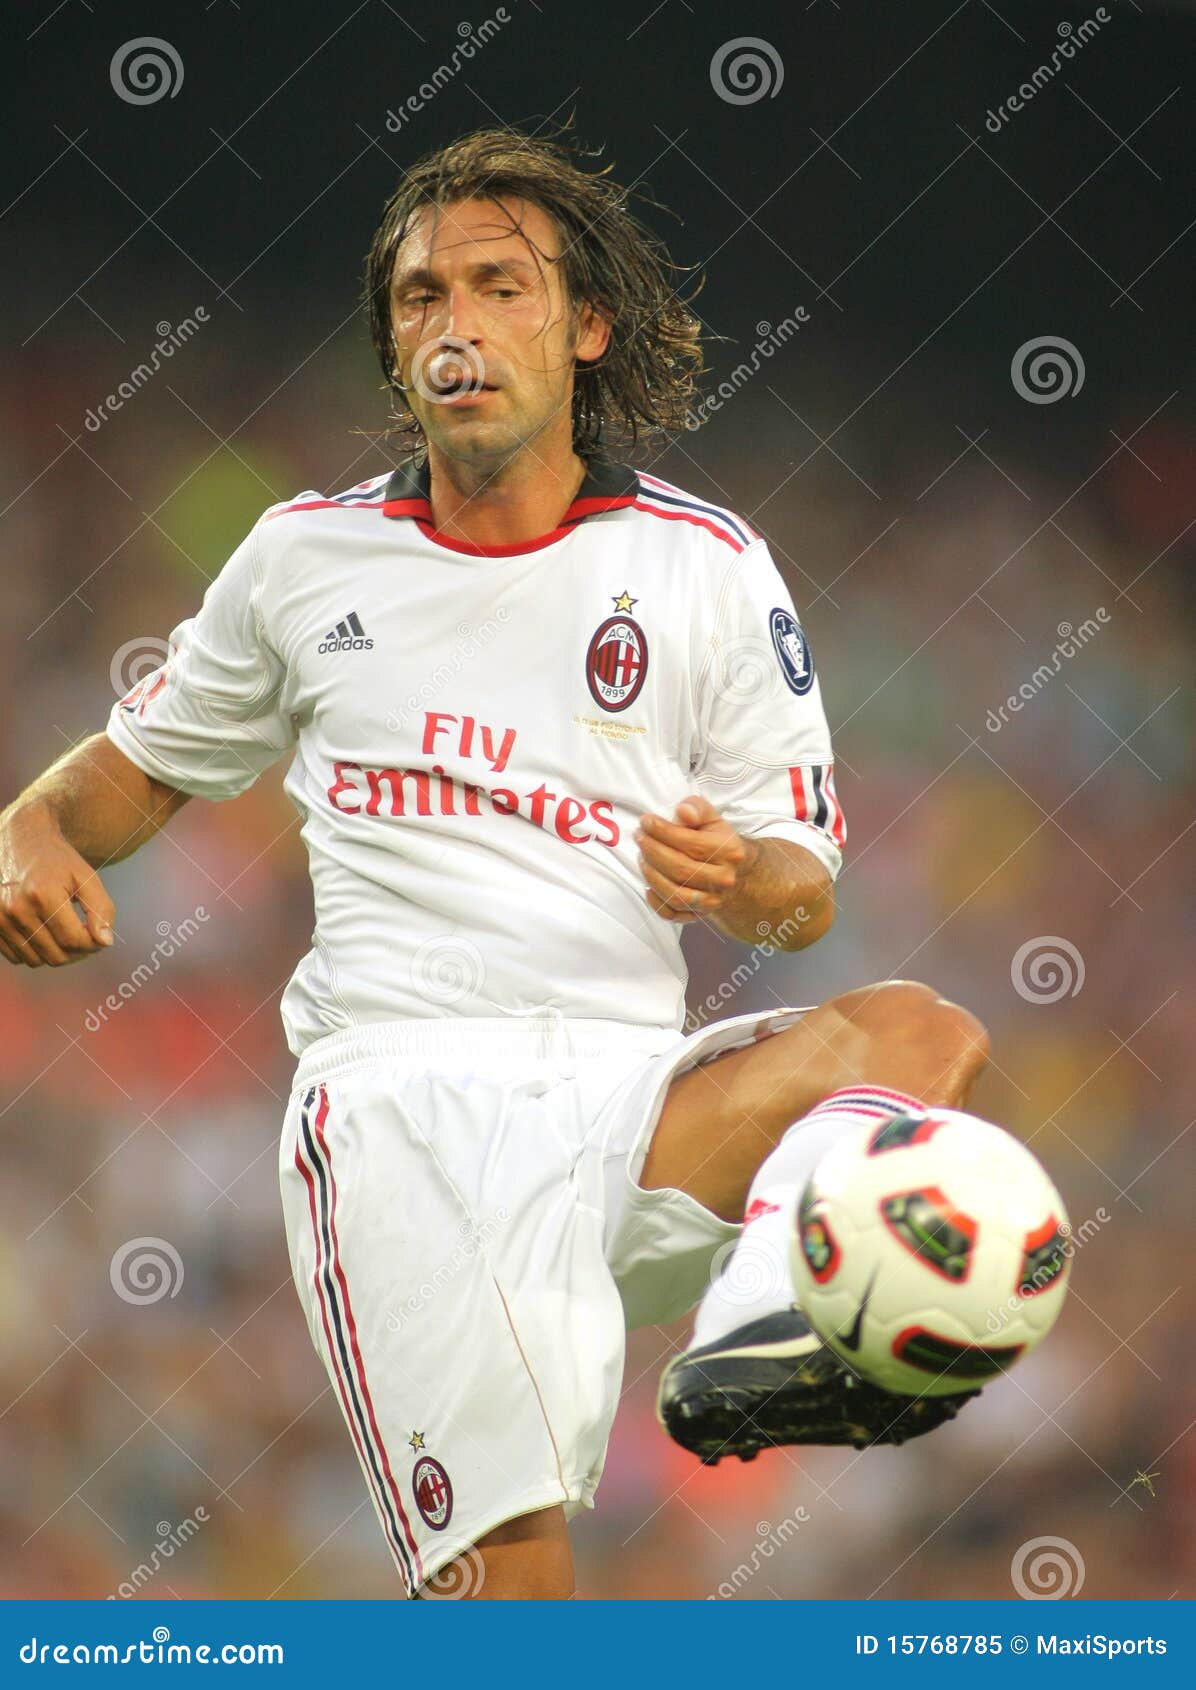 Andrea Pirlo AC Milan jersey